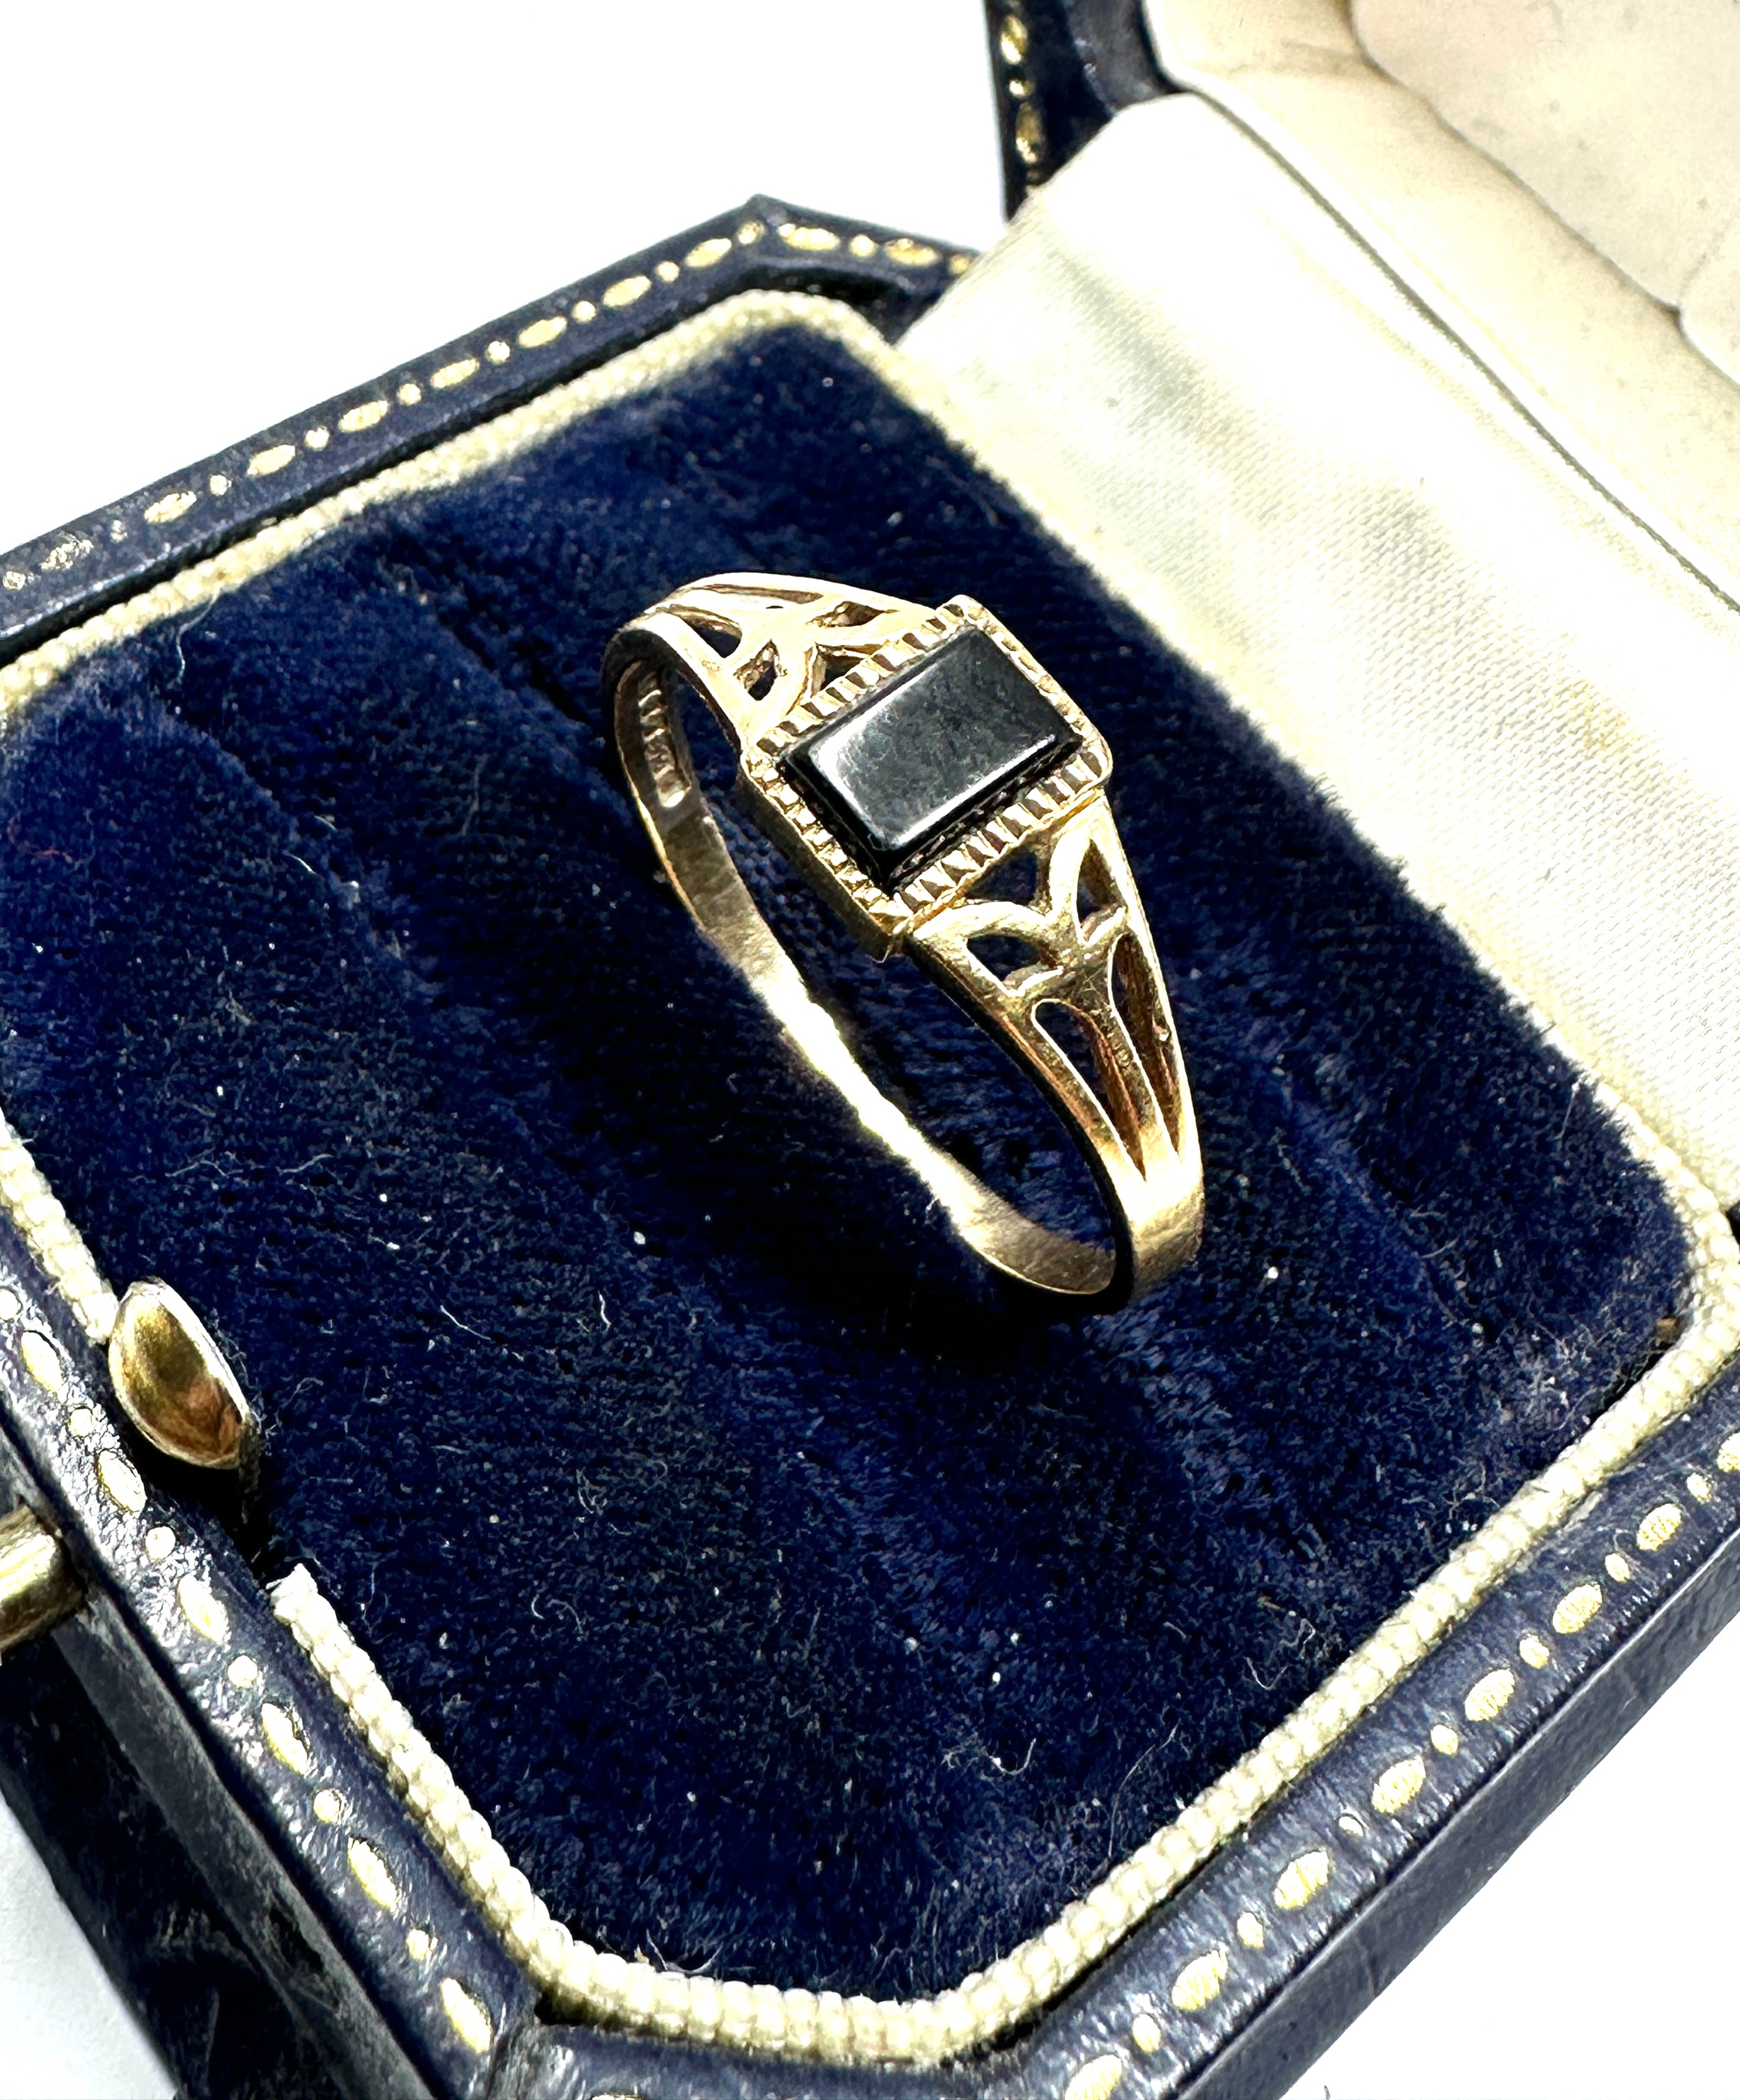 9ct gold black onyx ring 1.8g - Image 3 of 4